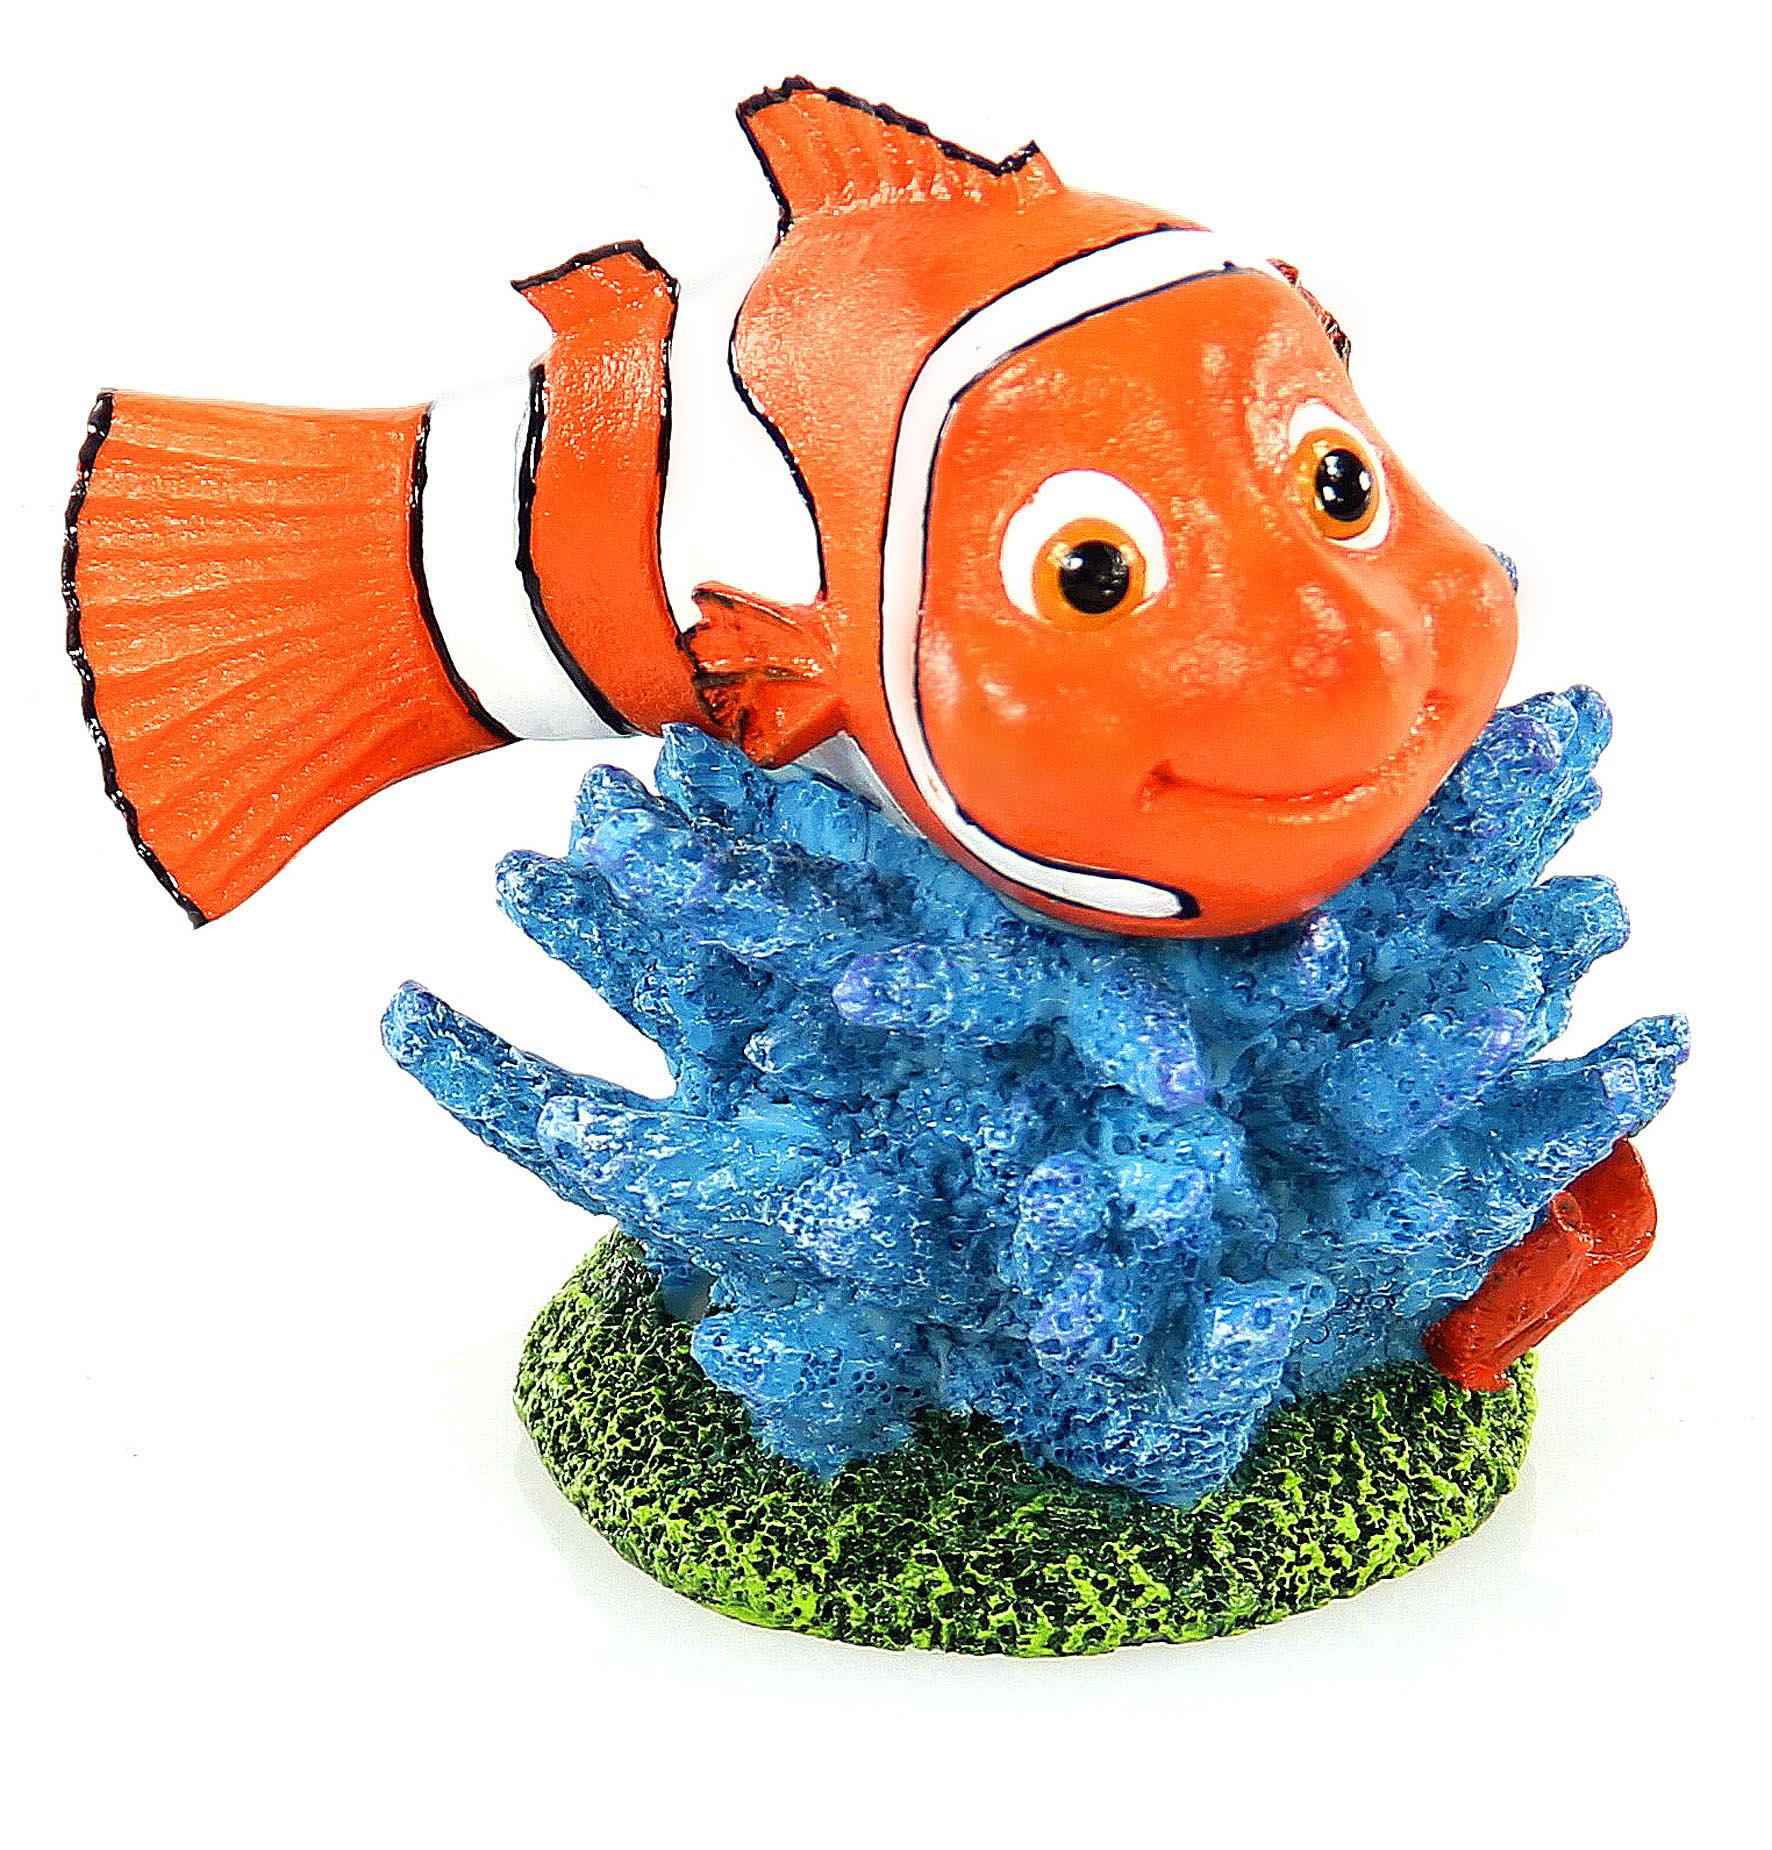 Décoration Finding Dory - Nemo